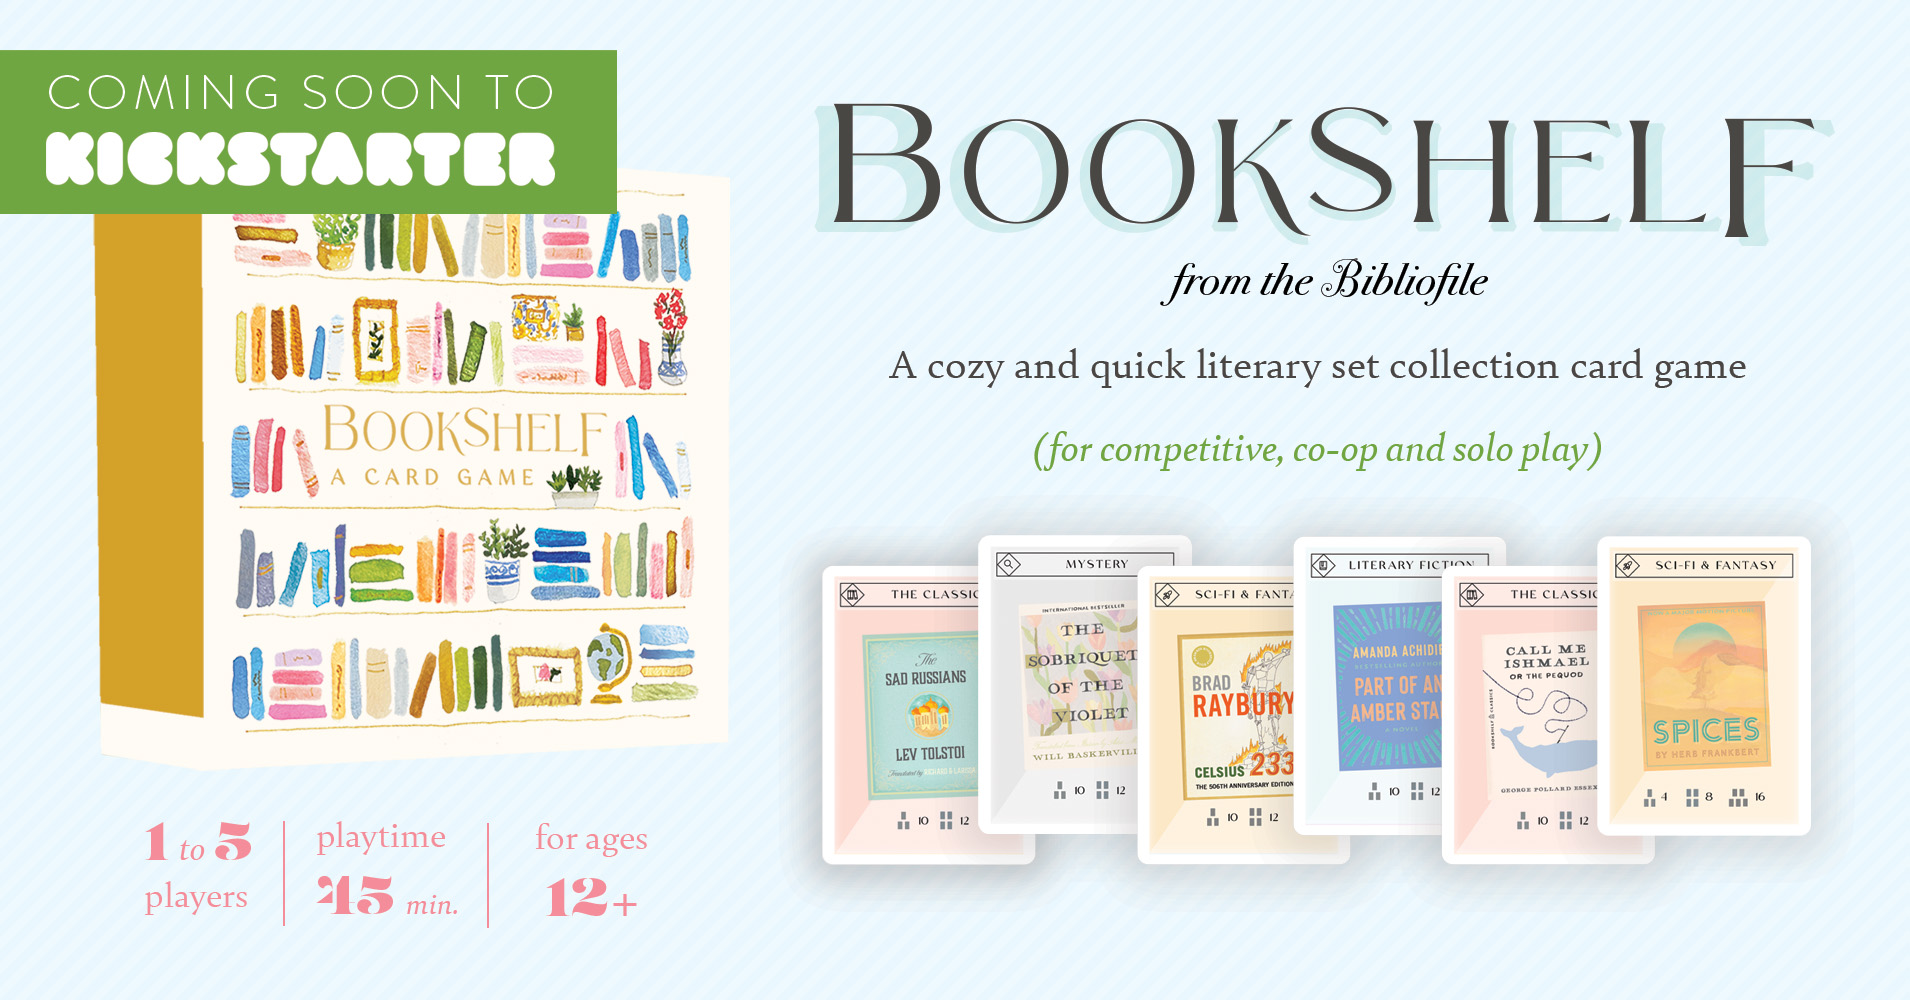 Bookshelf -- A literary set collection game